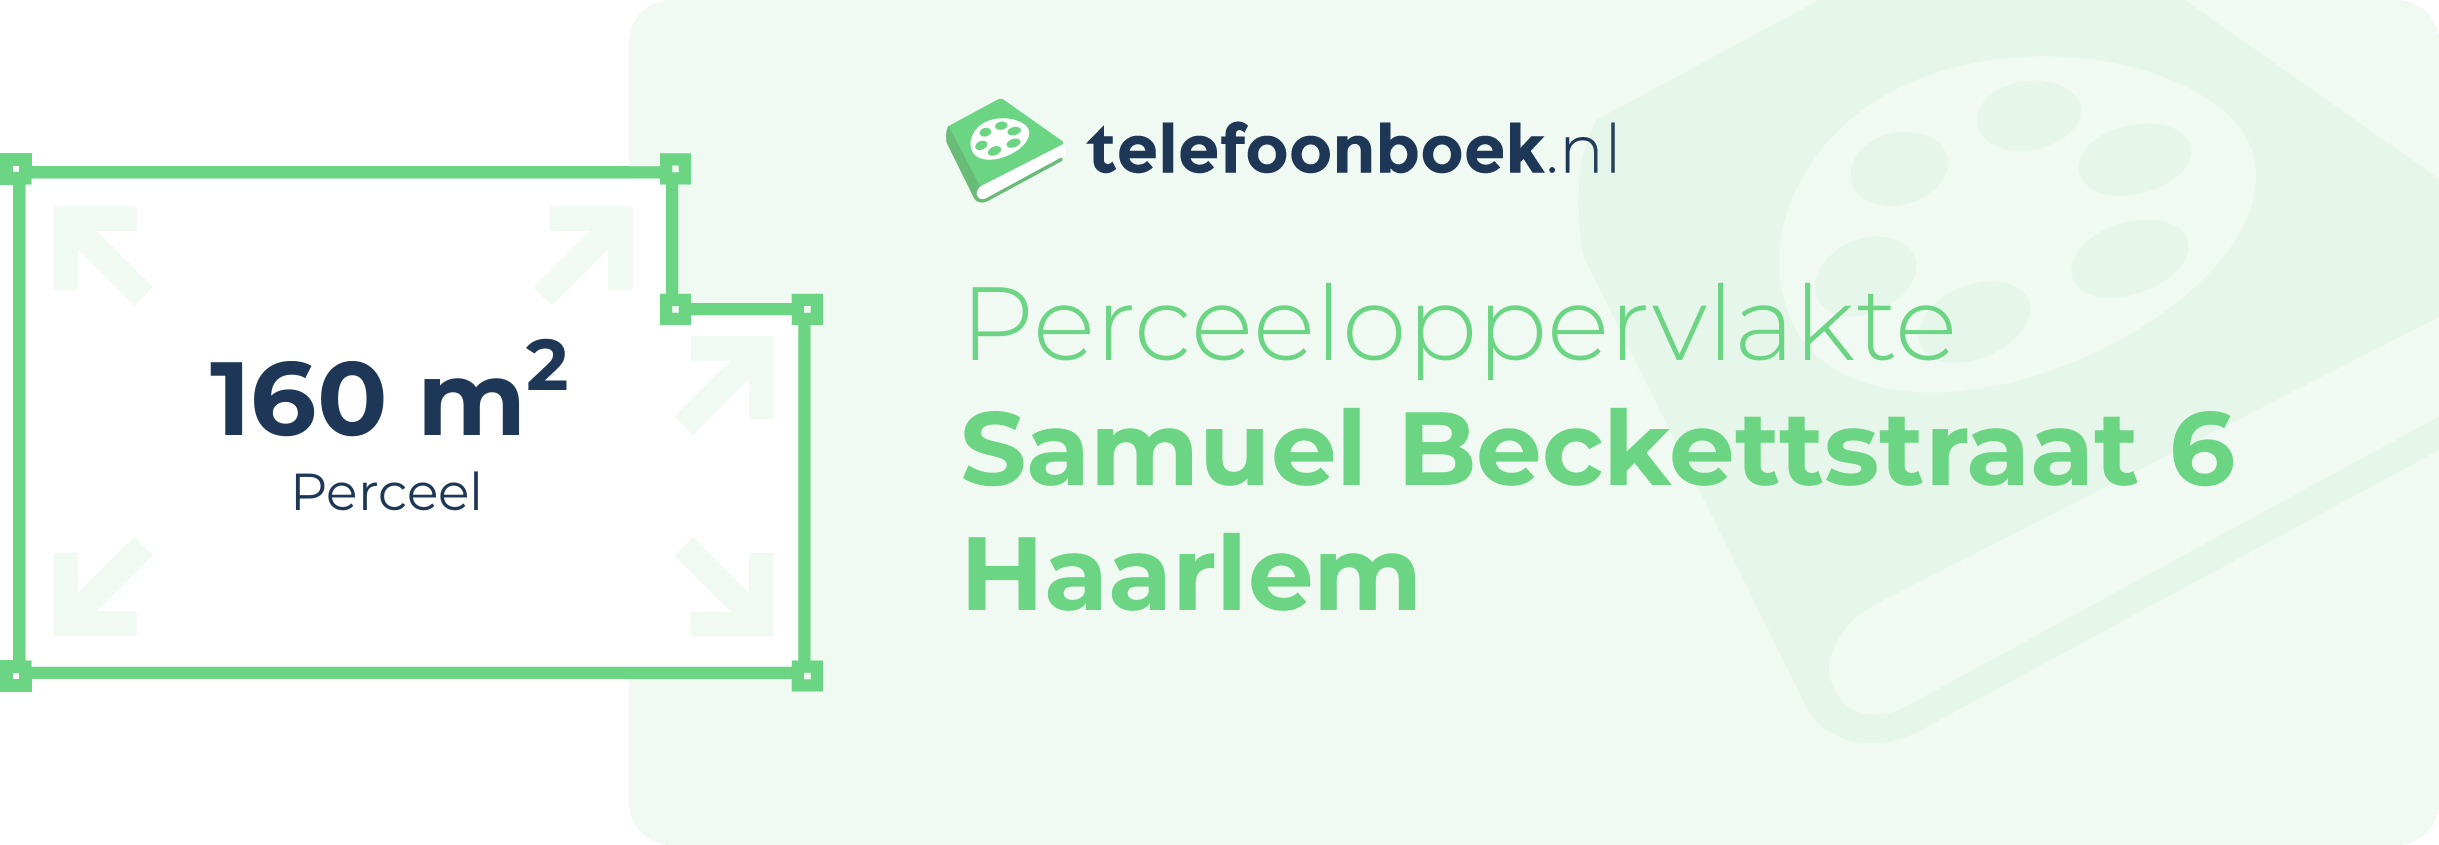 Perceeloppervlakte Samuel Beckettstraat 6 Haarlem